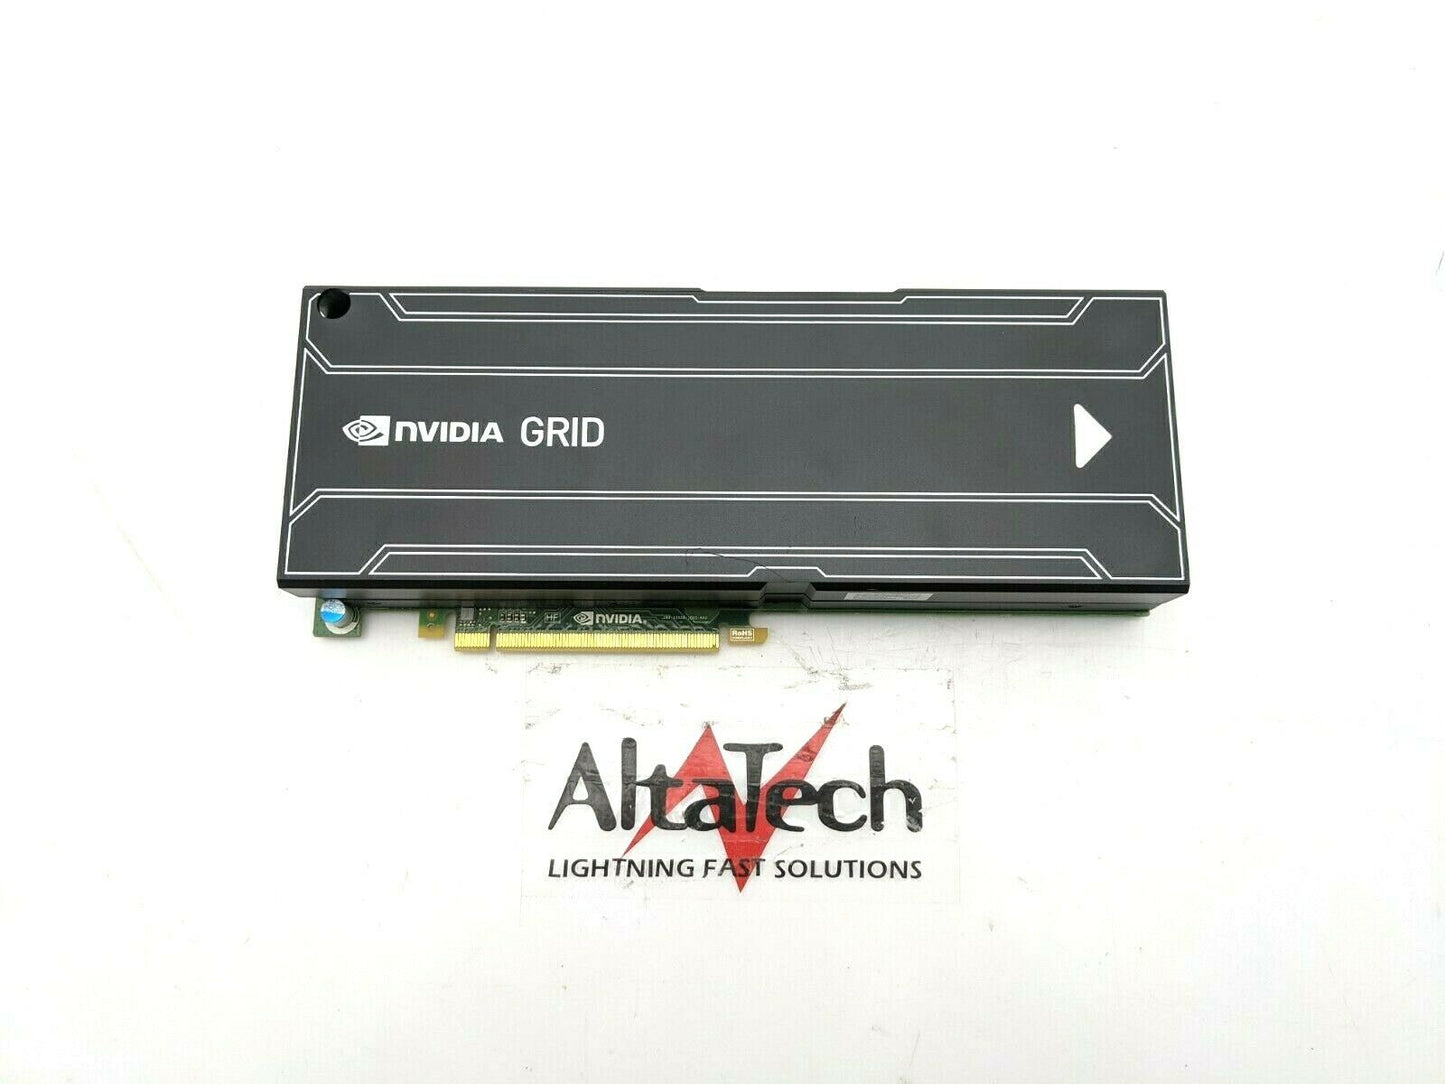 HP 732635-001 Nvidia Grid K2 Dual GPU PCI-Express Video Graphics Card, Used